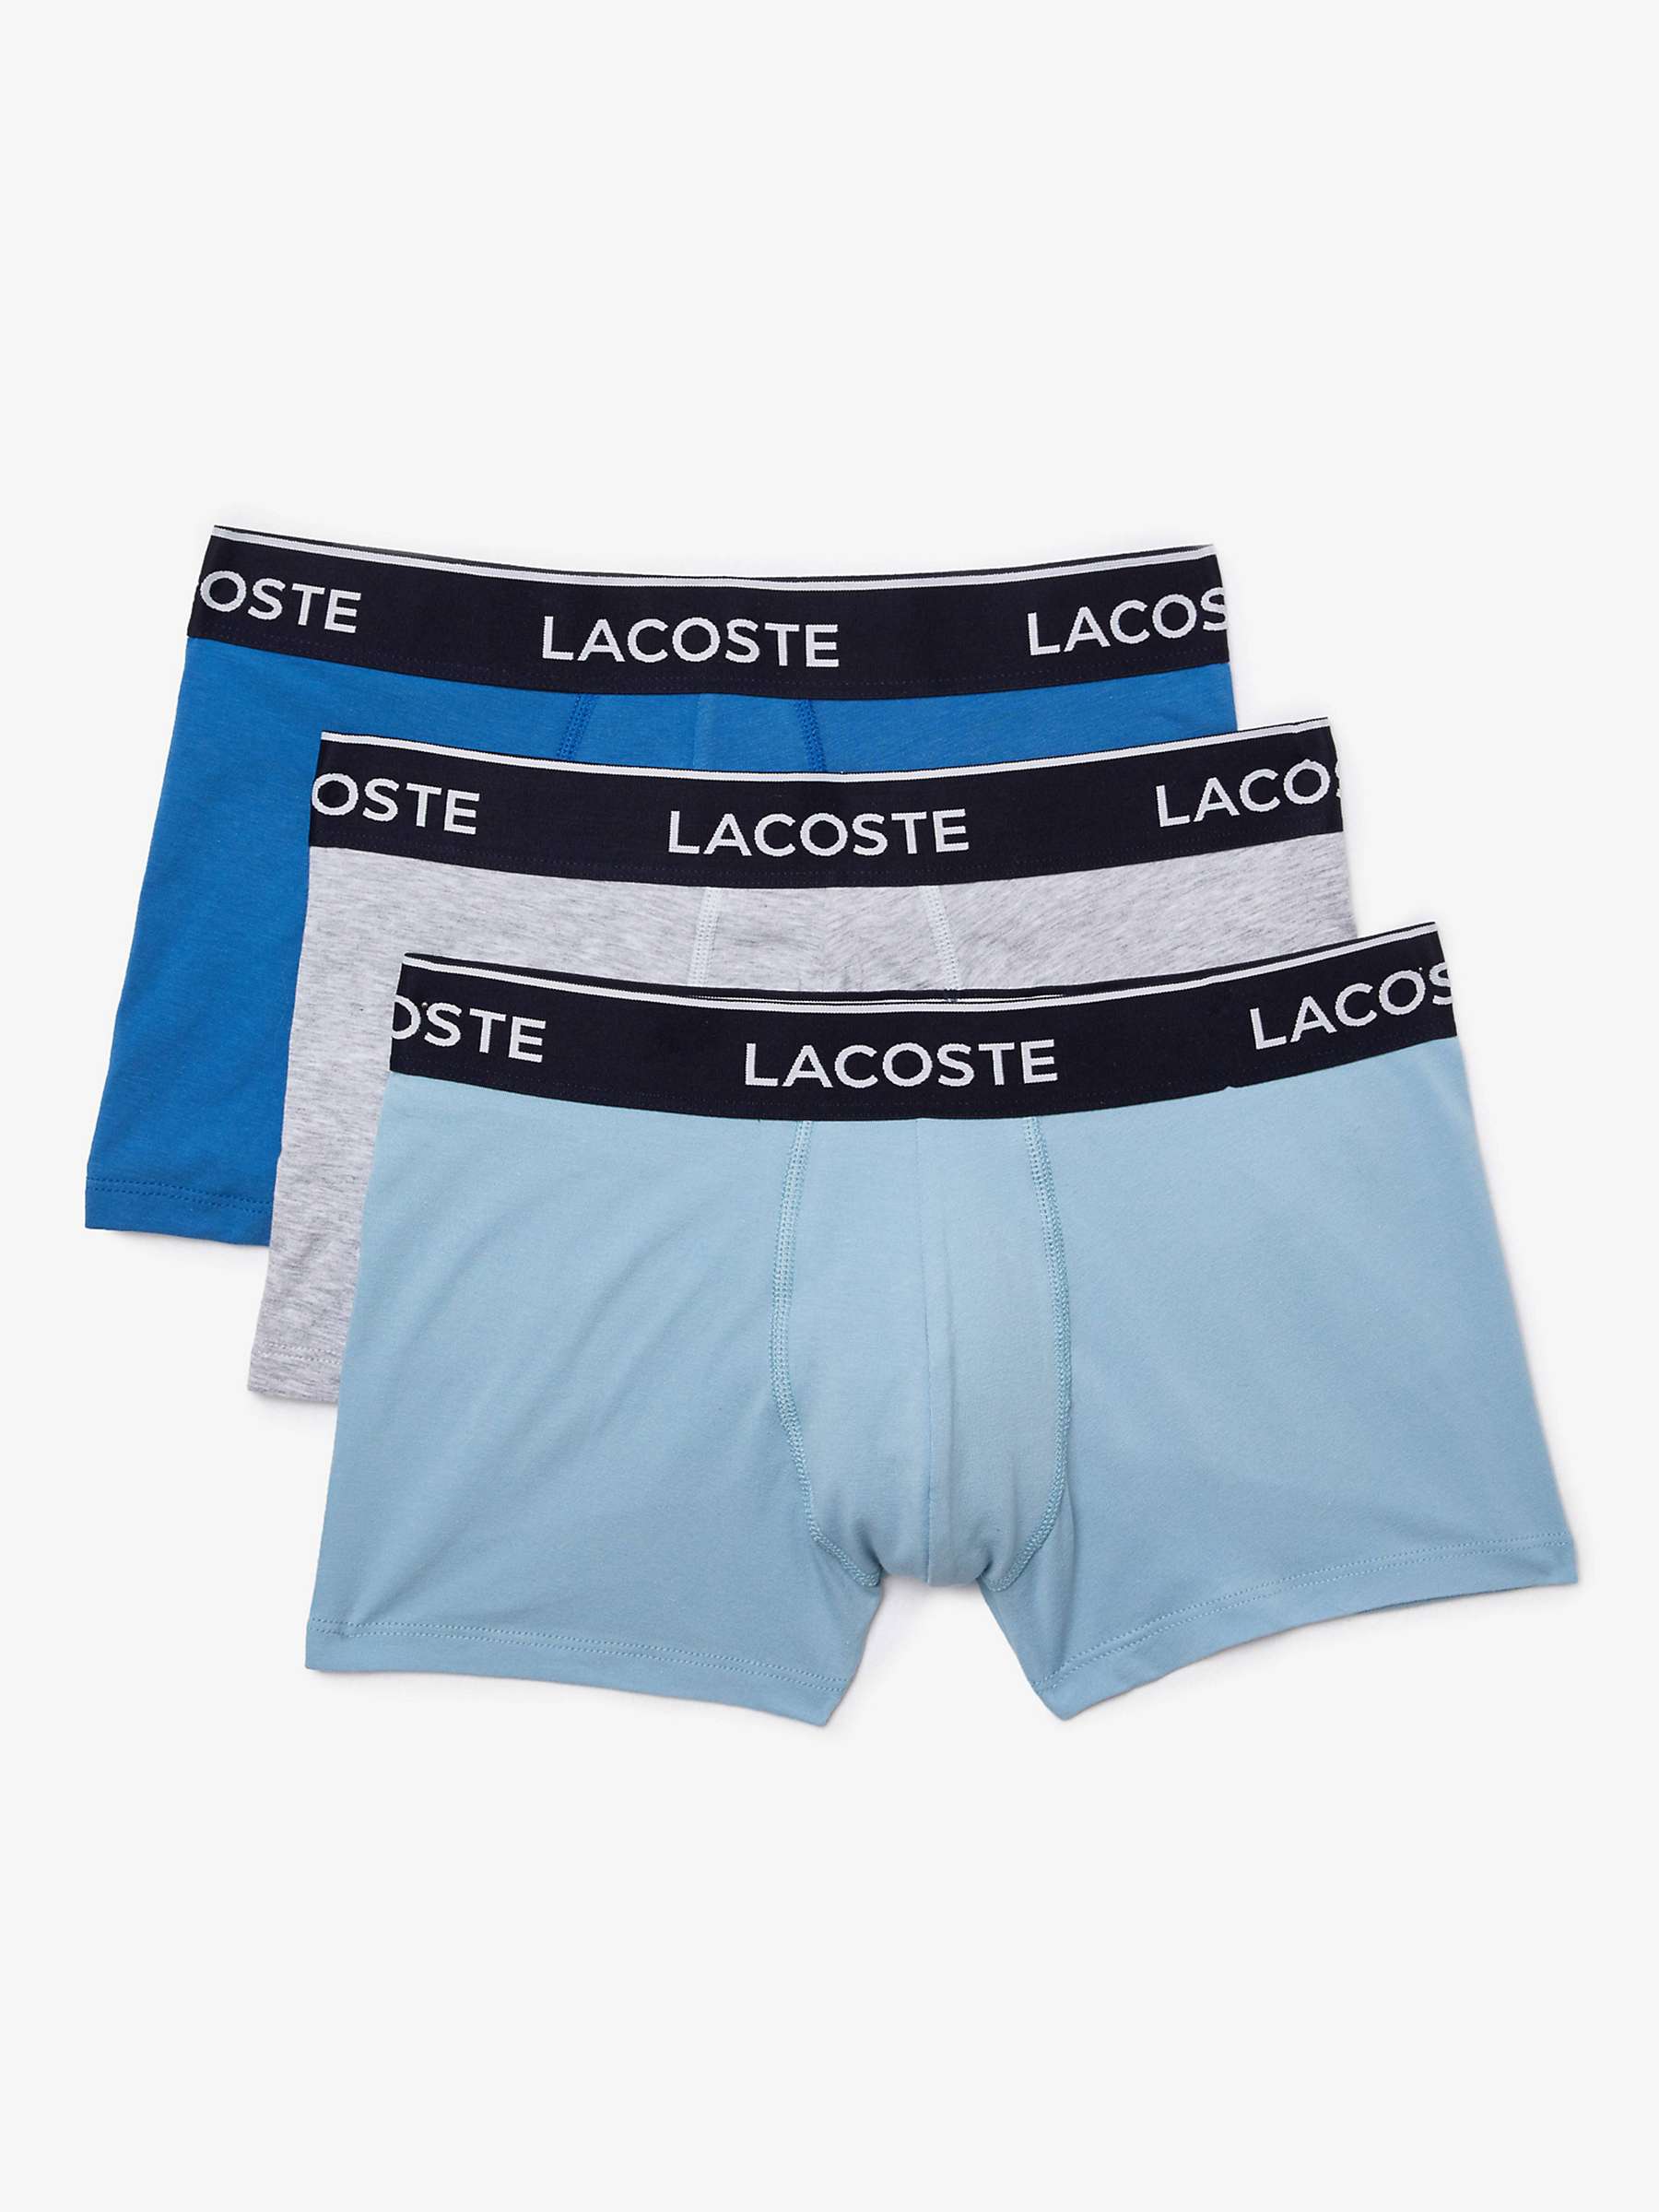 Buy Lacoste Plain Colour Trunks, Pack of 3 Online at johnlewis.com